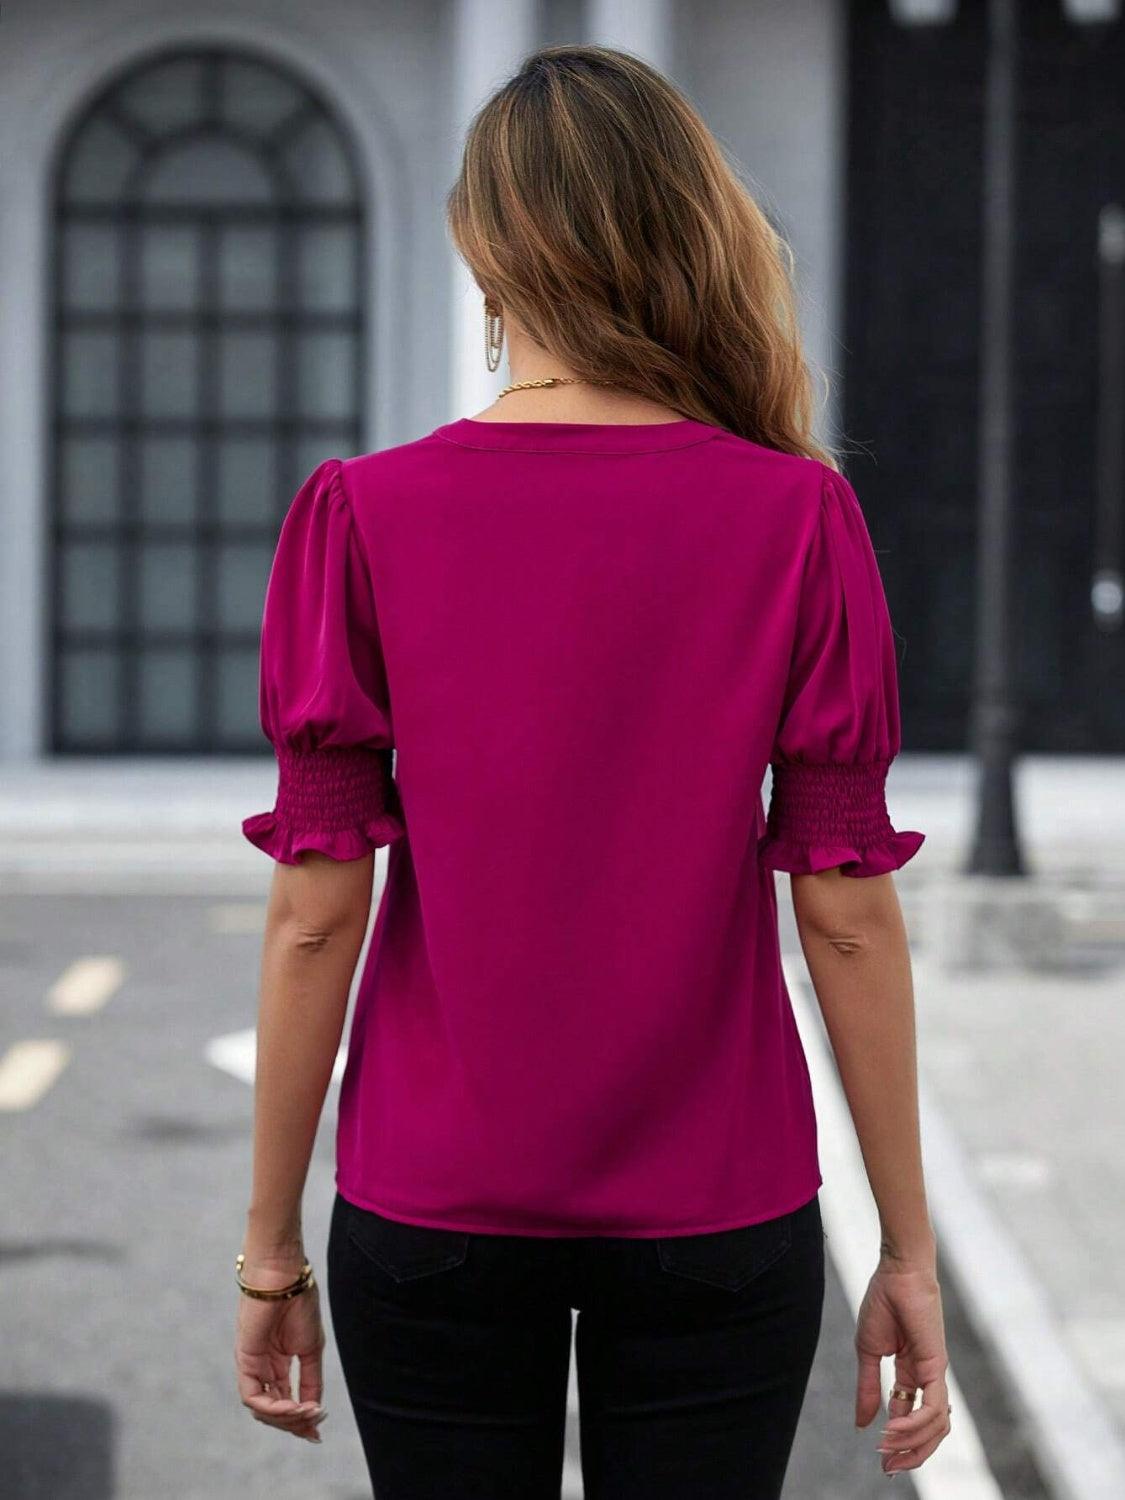 a woman walking down a street wearing a pink top